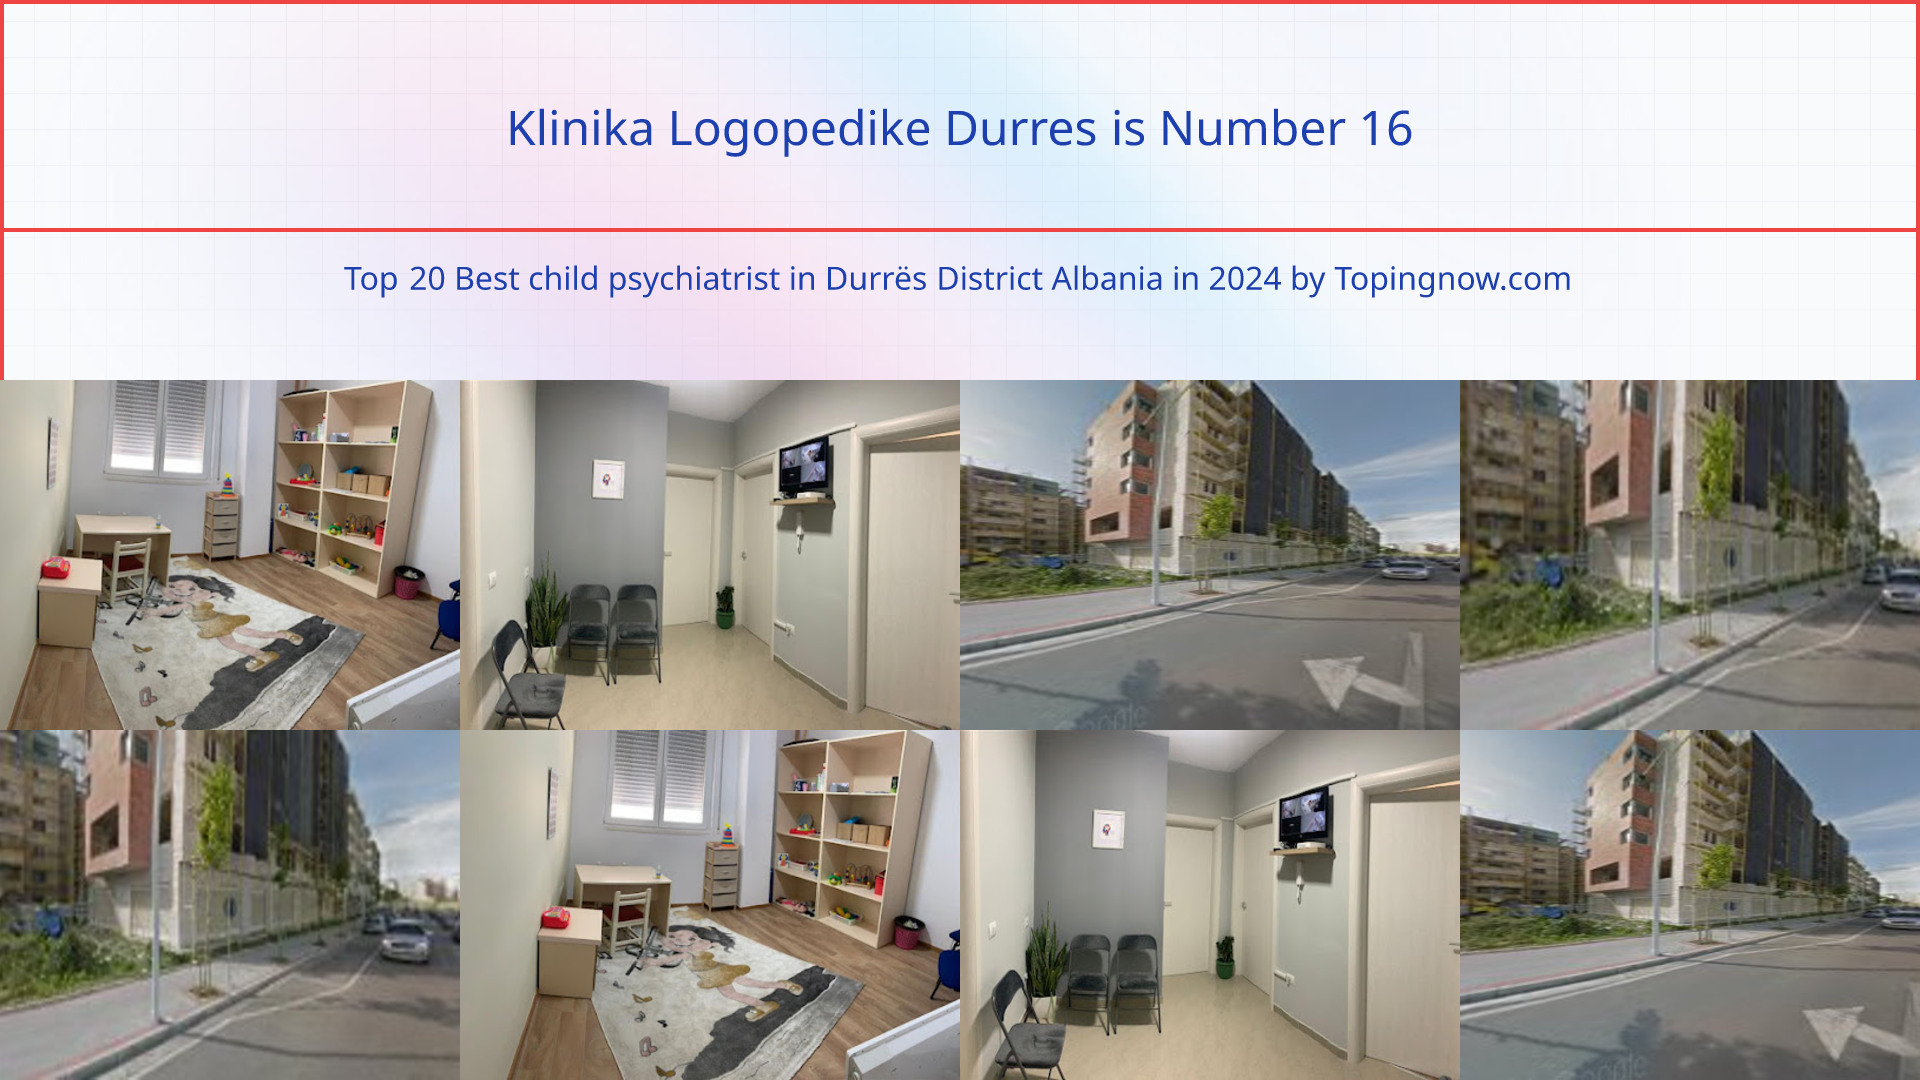 Klinika Logopedike Durres: Top 20 Best child psychiatrist in Durrës District Albania in 2024